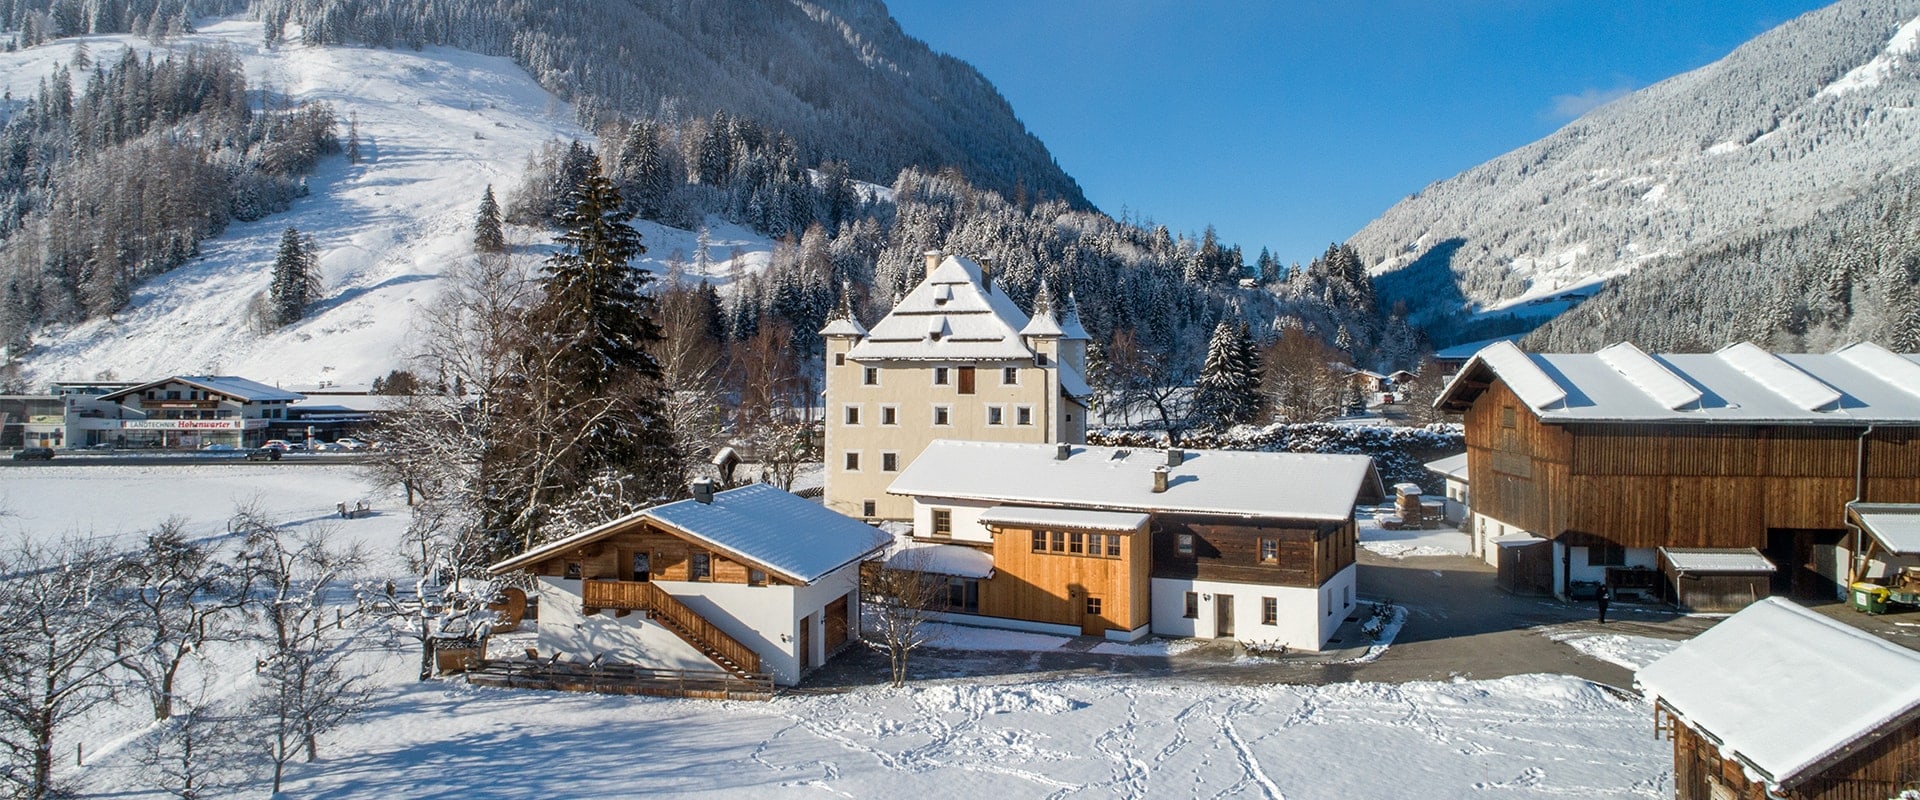 Schloss Saalhof Maishofen - Winter